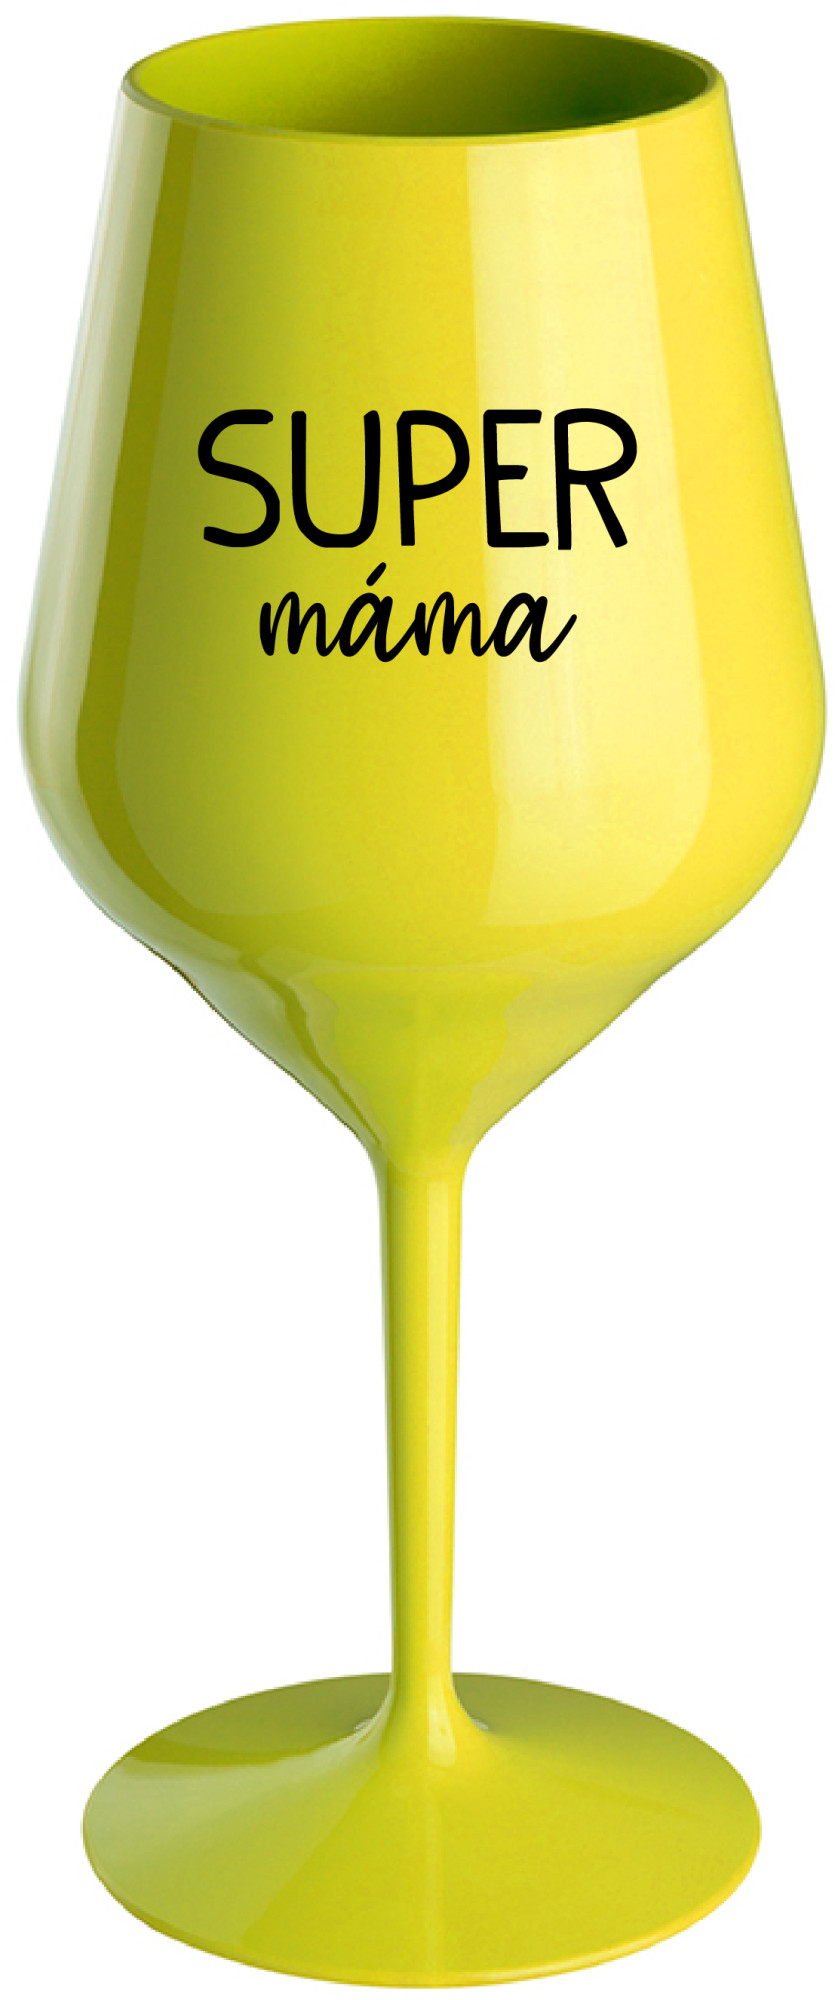 SUPER MÁMA - žlutá nerozbitná sklenice na víno 470 ml